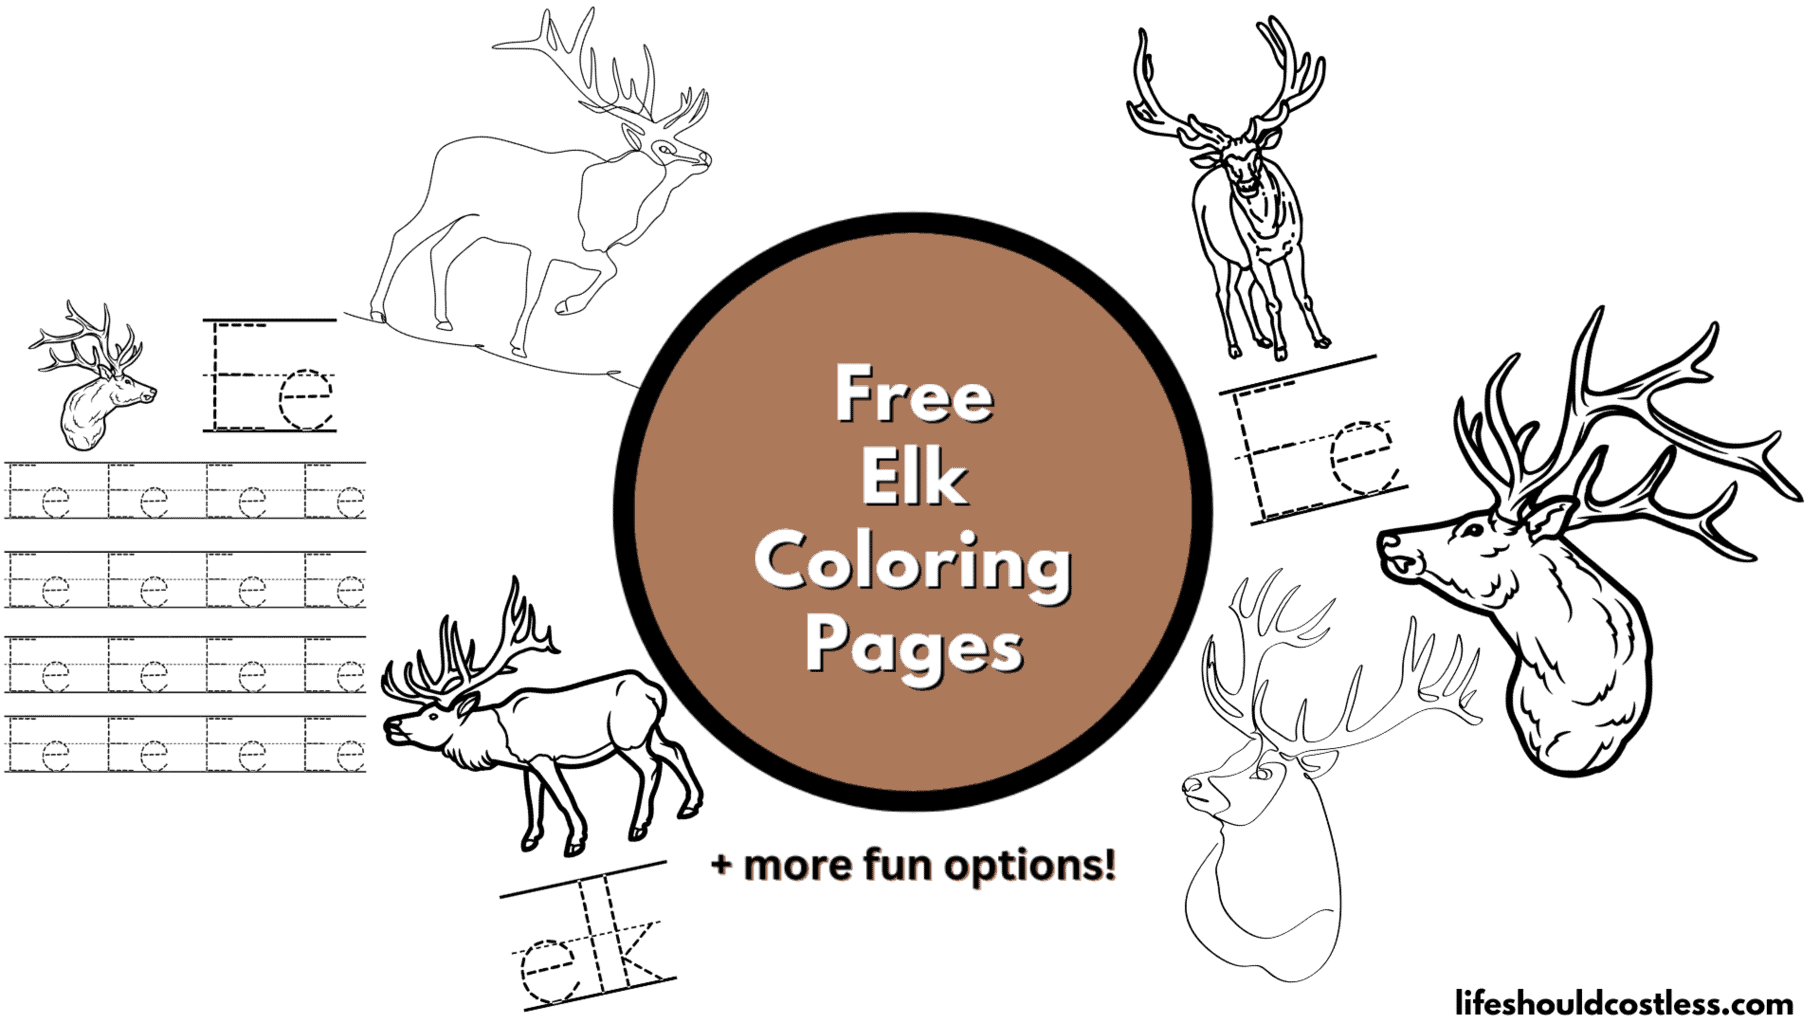 Elk coloring pages free printable pdf templates